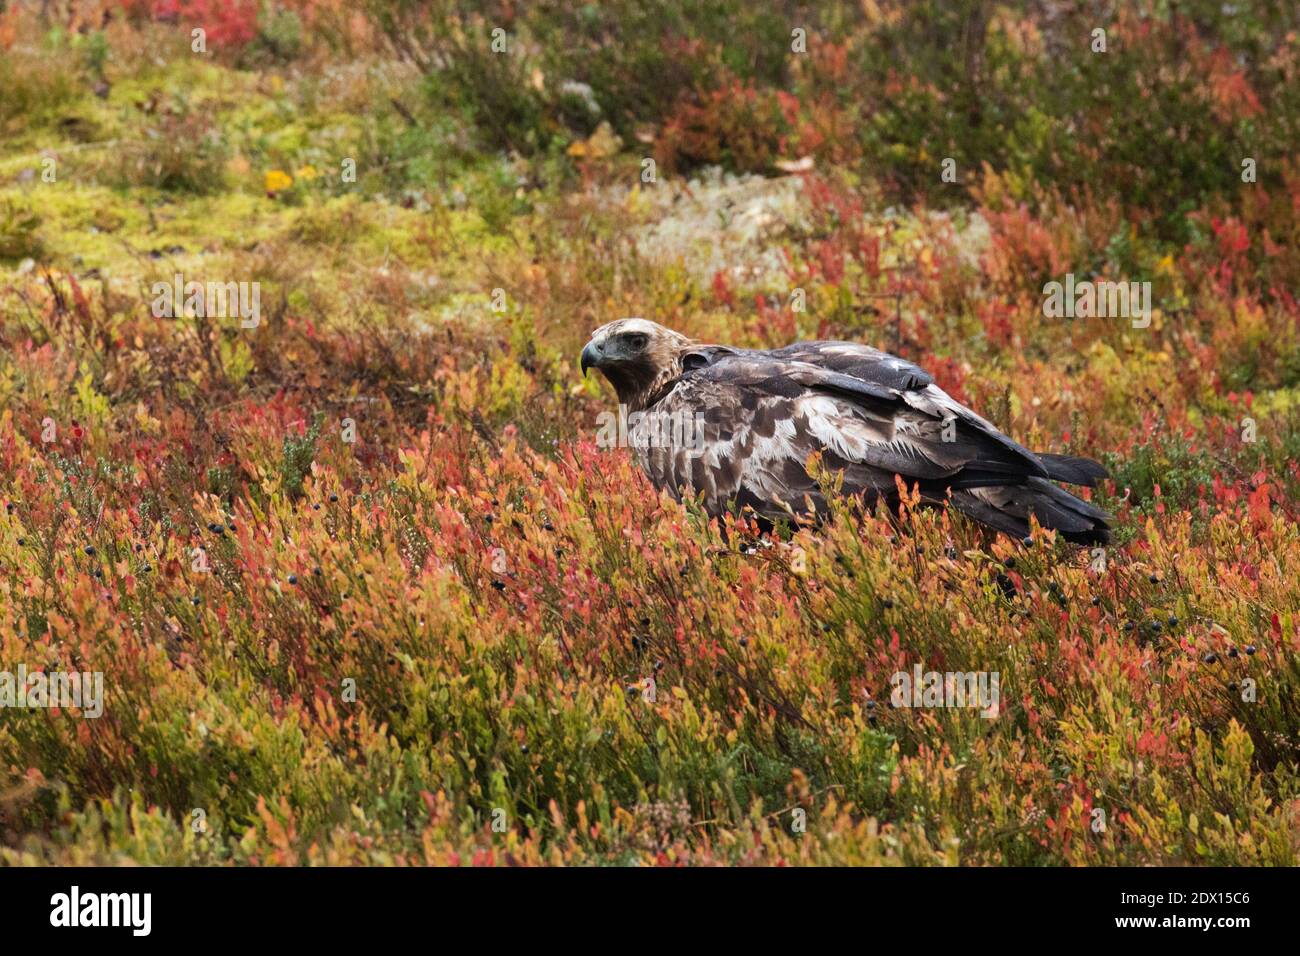 Majestic European predator Golden eagle, Aquila chrysaetos feeding on a carcass during an autumn foliage in taiga forest near Kuusamo, Northern Finlan Stock Photo